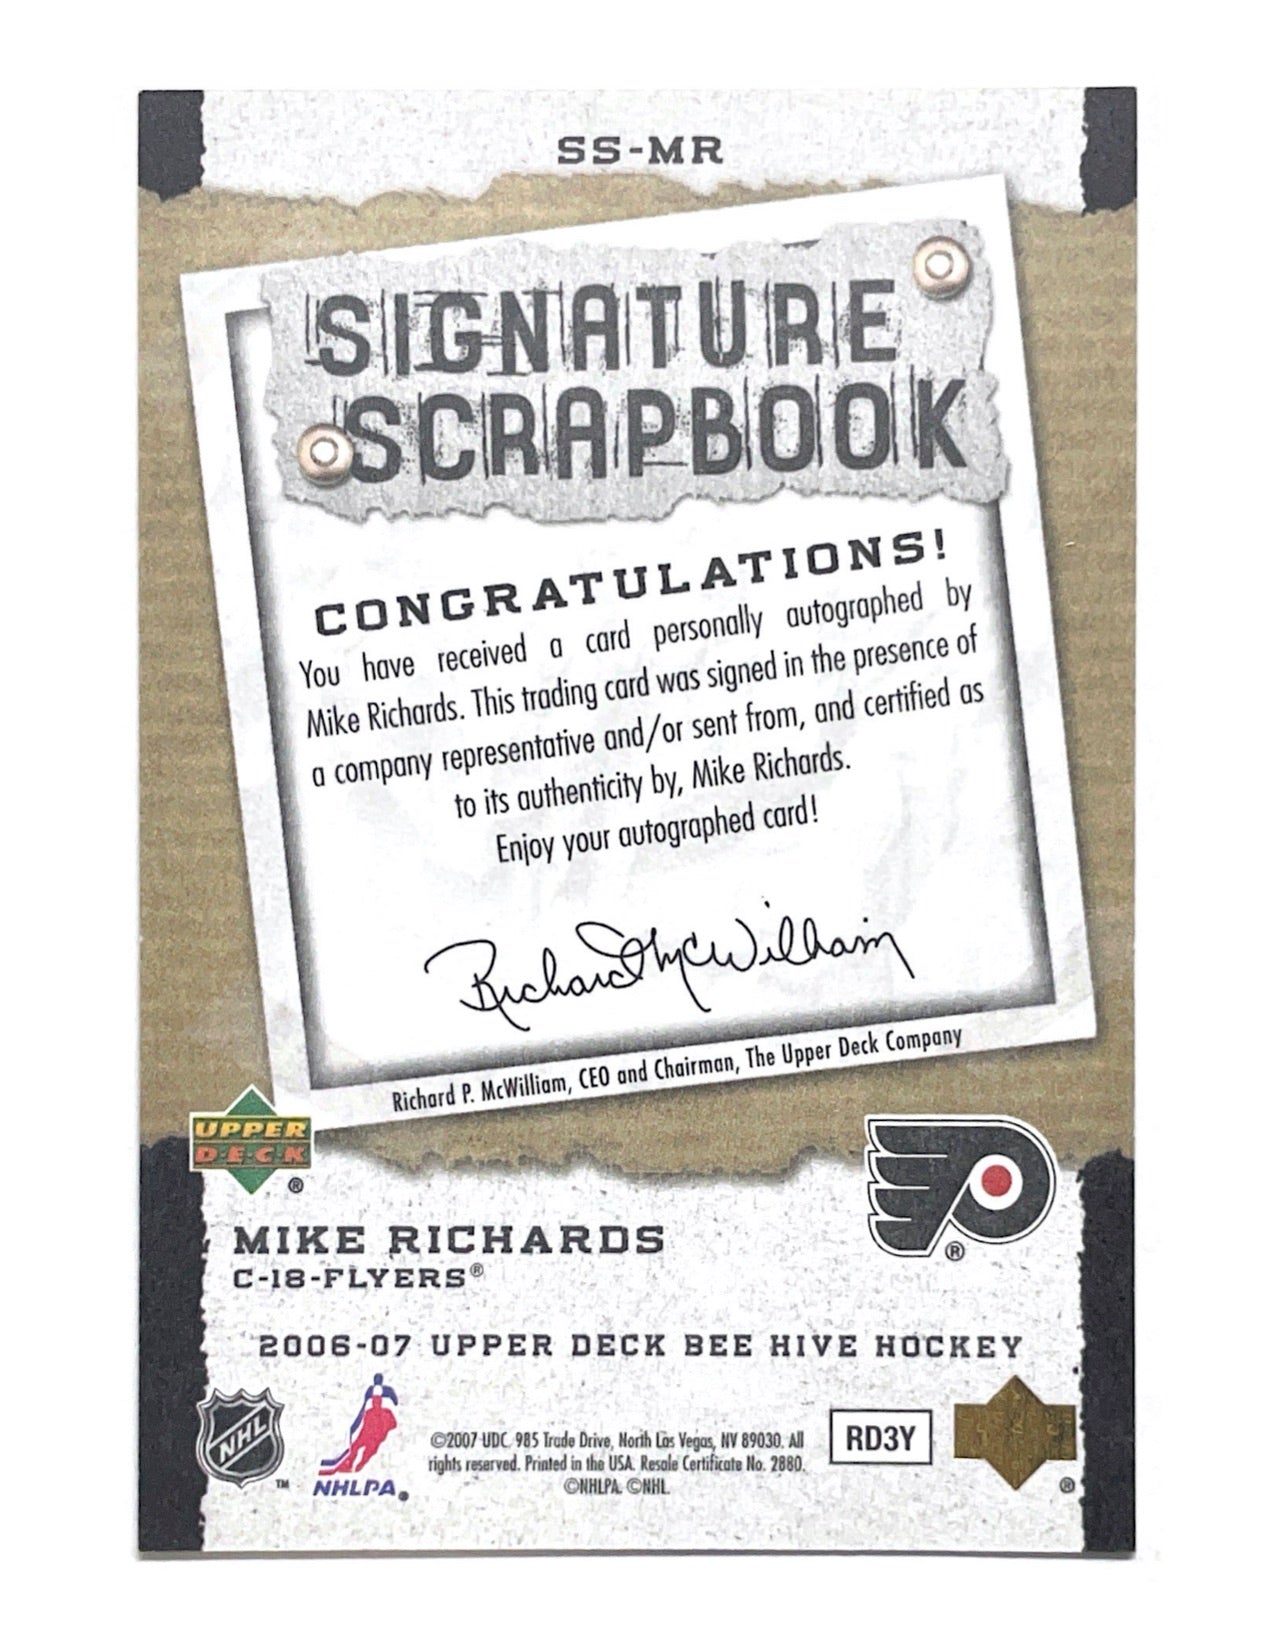 Mike Richards 2006-07 Upper Deck Bee Hive Signature Scrapbook Autograph #SS-MR